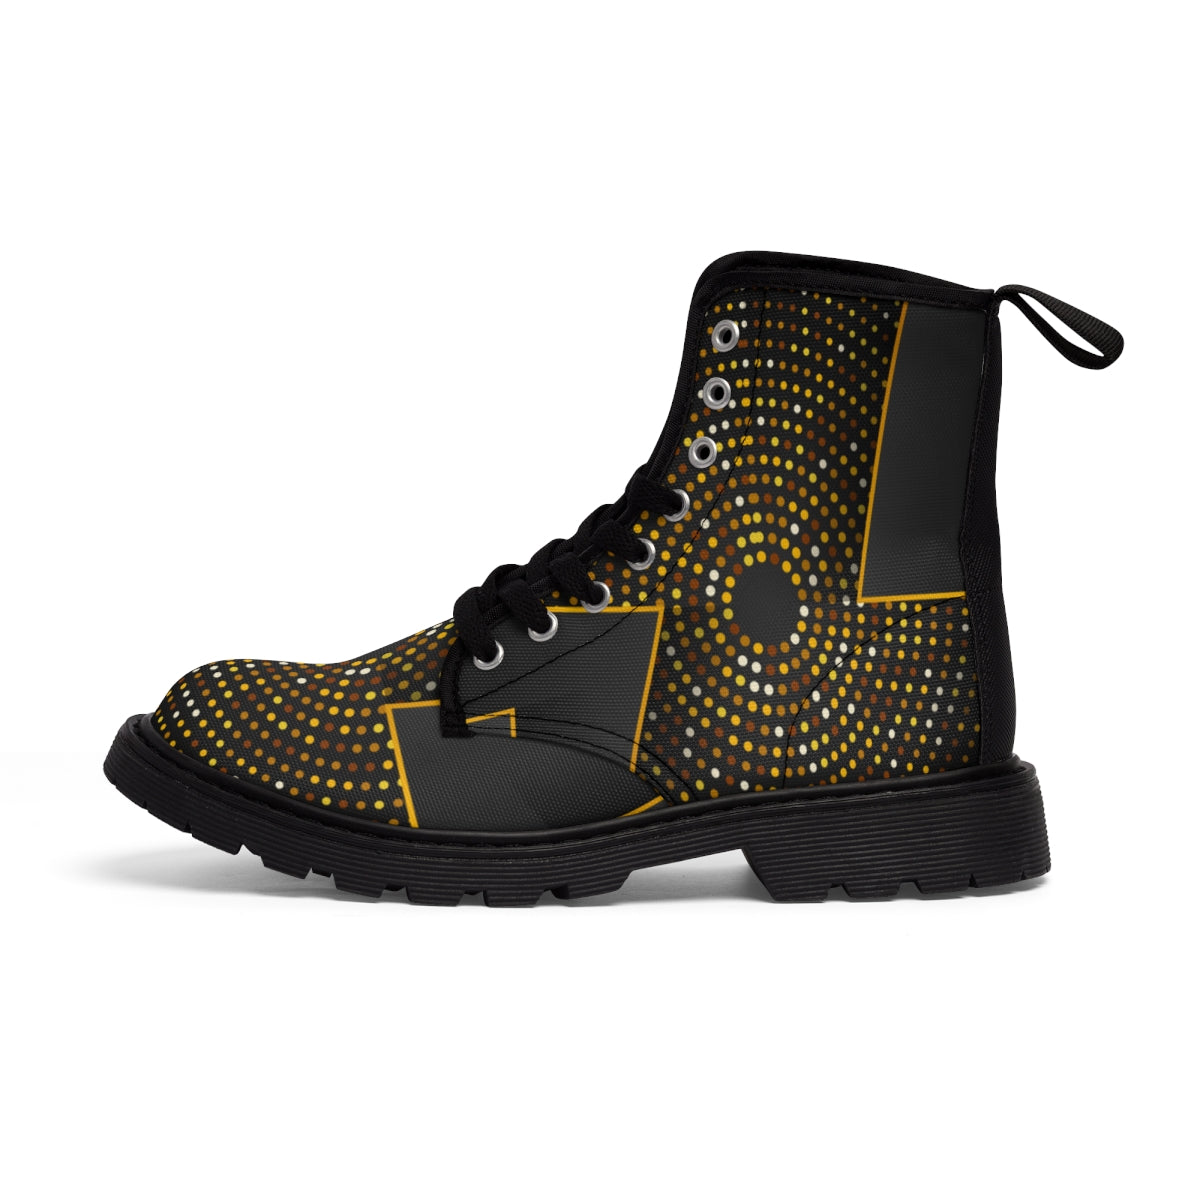 Men's Canvas Boots, Luxury Golden Black Design